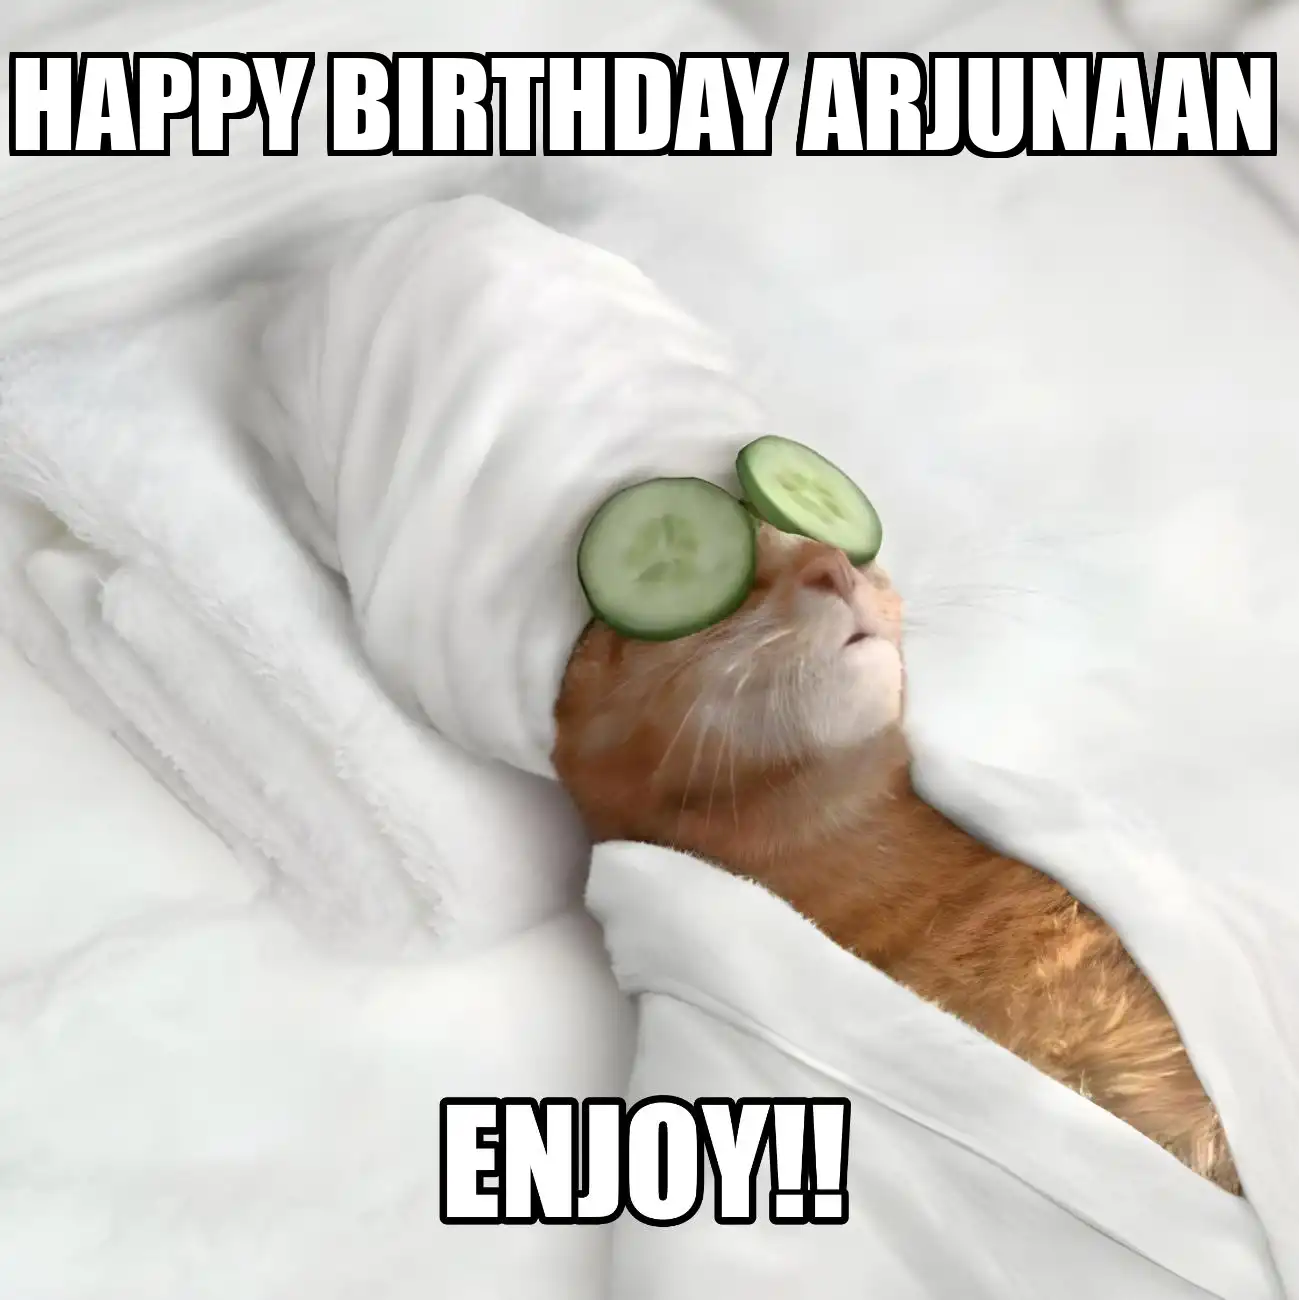 Happy Birthday Arjunaan Enjoy Cat Meme